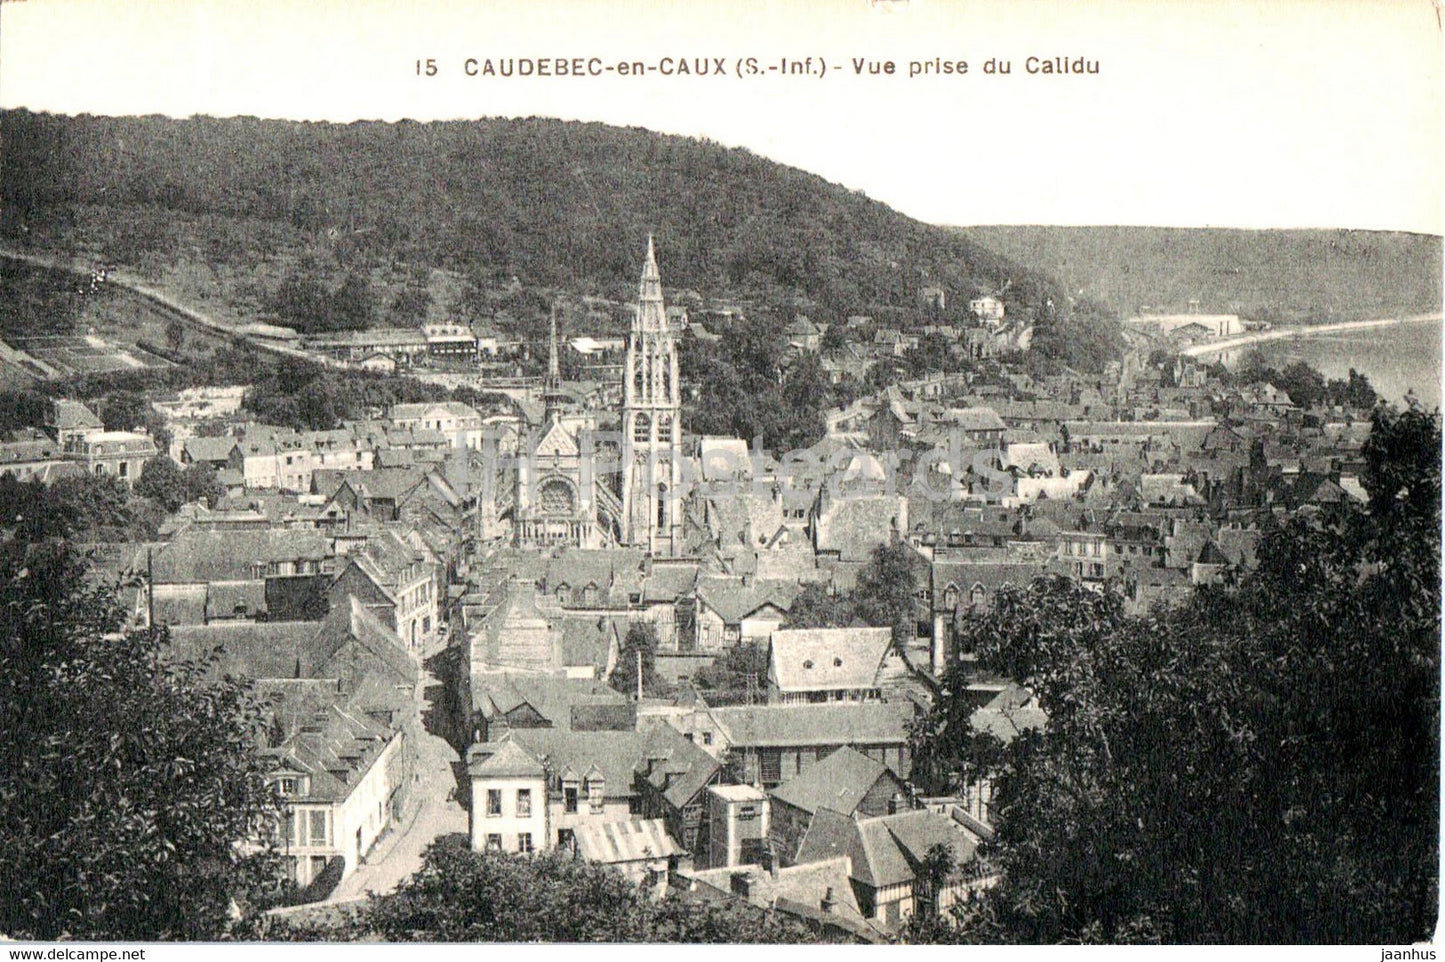 Caudebec en Caux - Vue prise du Calidu - 15 - old postcard - France - unused - JH Postcards